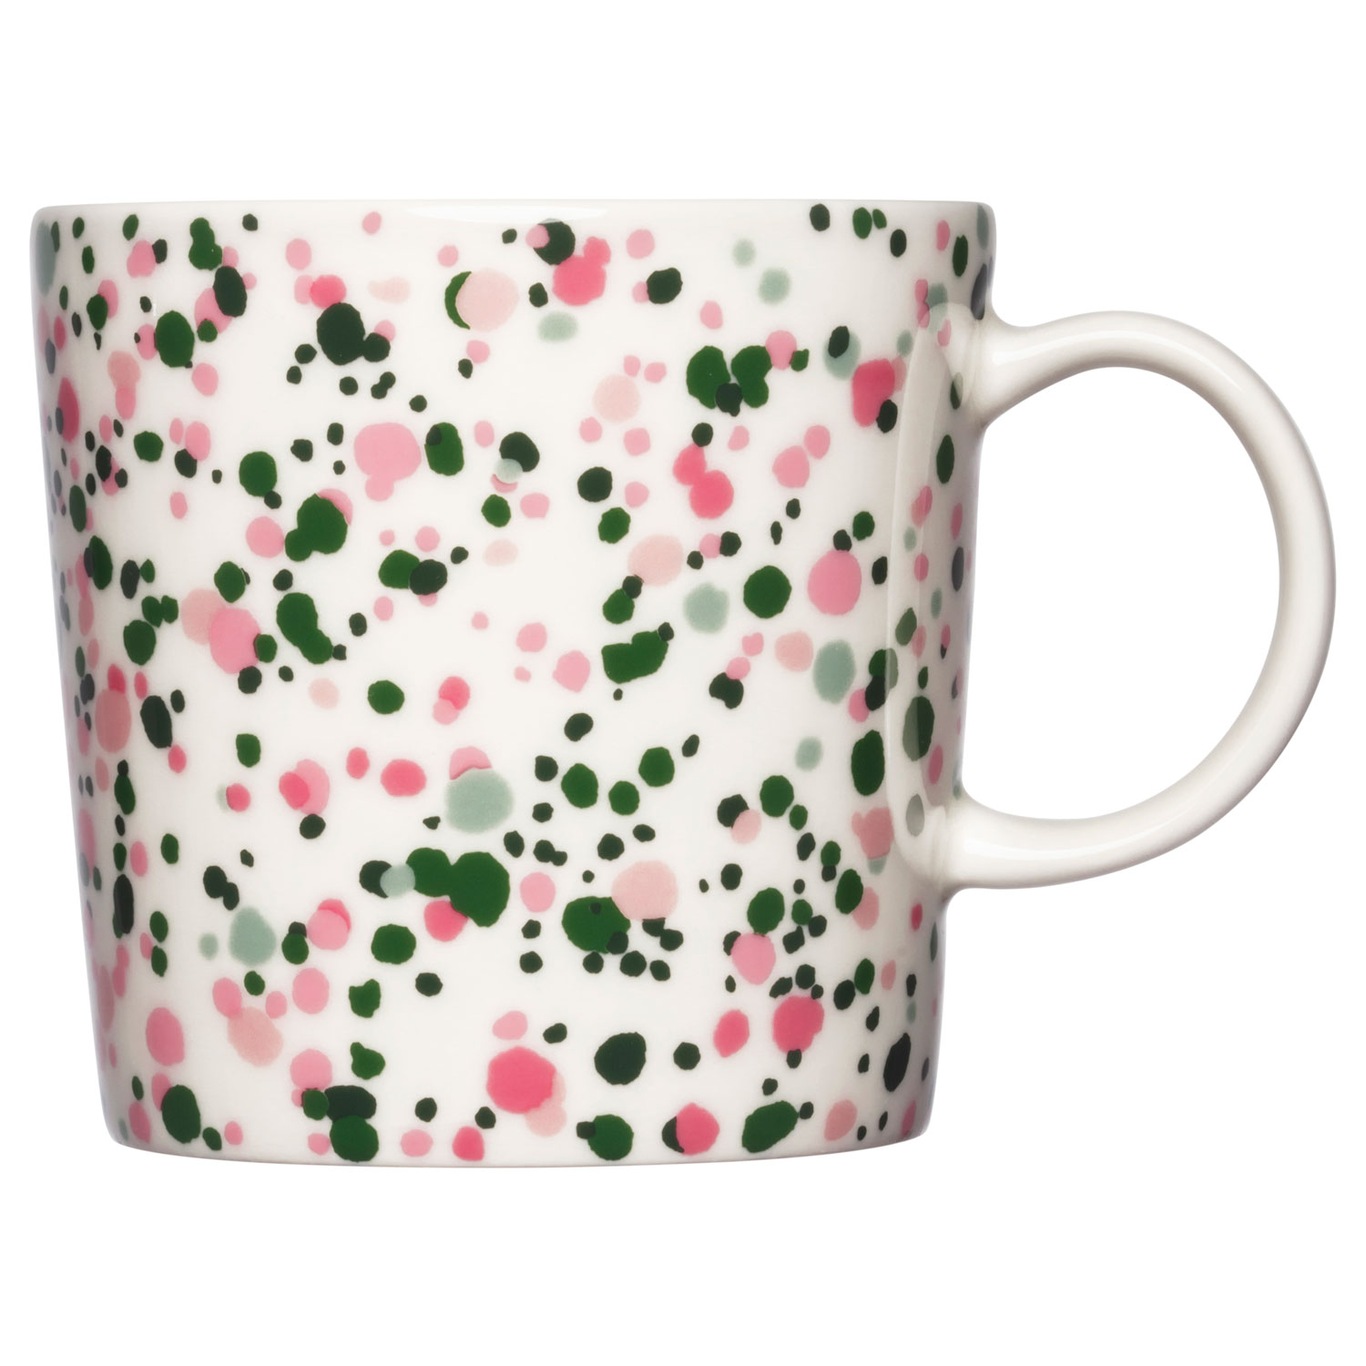 Oiva Toikka Collection Mug 30 cl, Helle Pink/Green